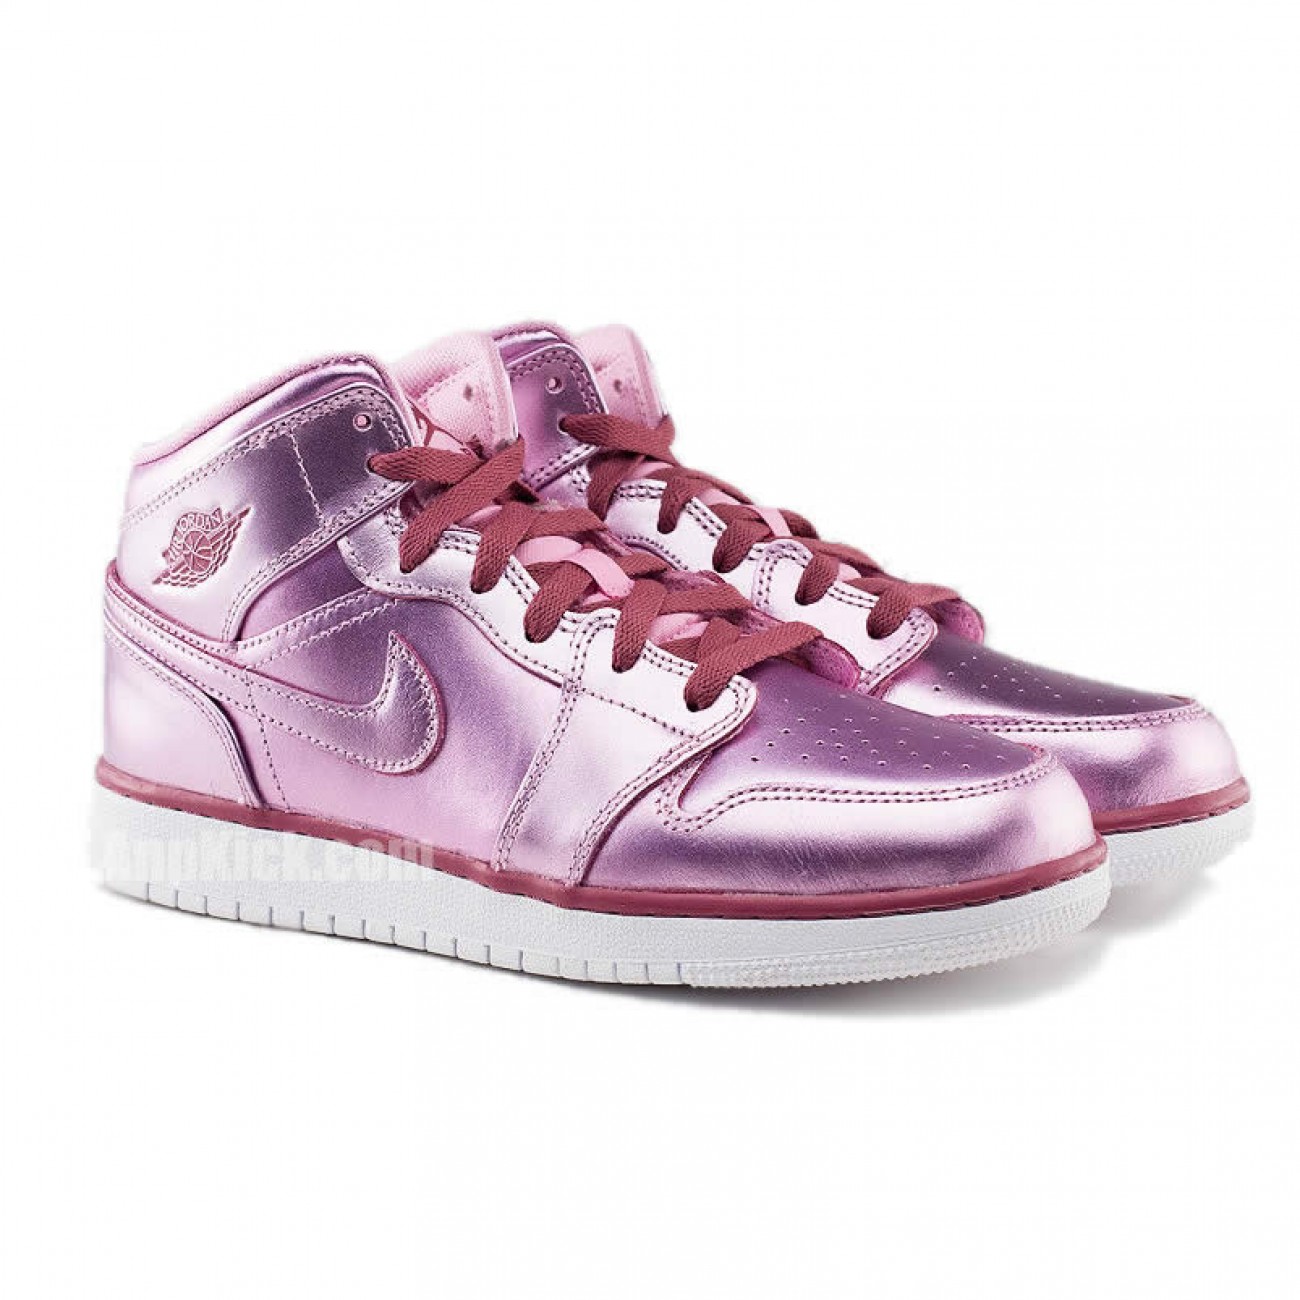 Air Jordan 1 Mid SE "Pink Rise" AJ1 Kids GS Shoes AV5174-640